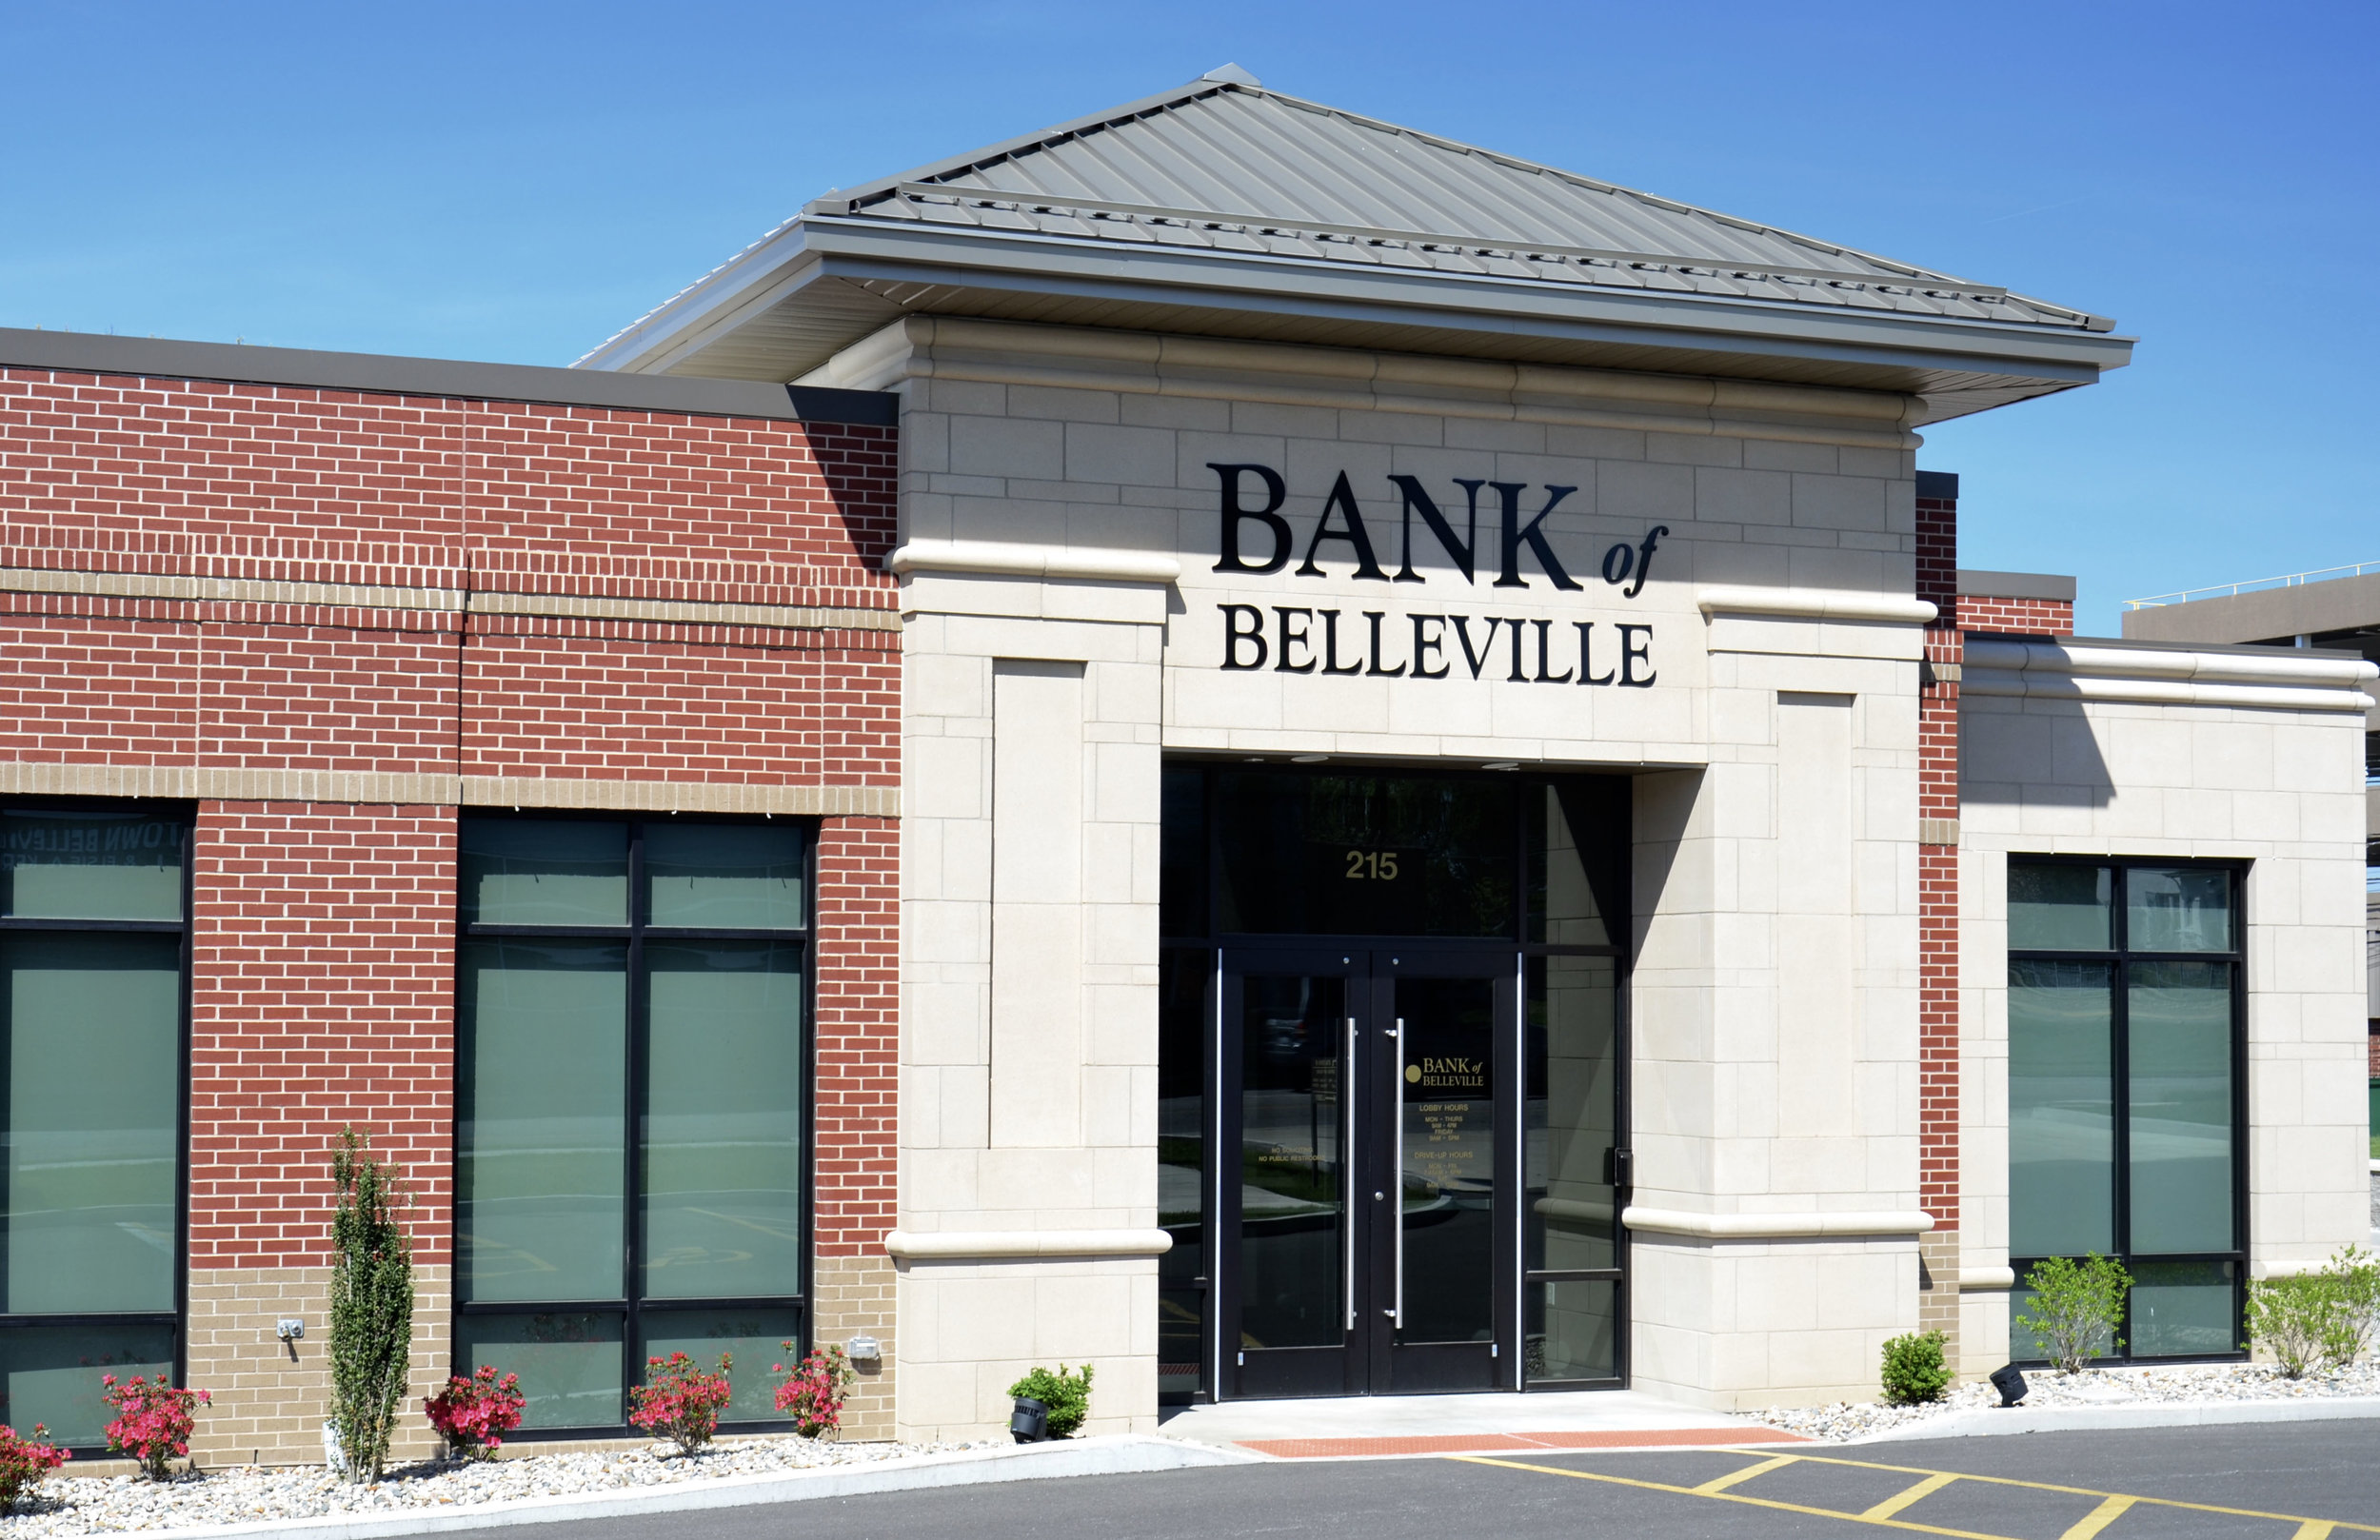 Bank of Belleville Exterior (Copy)